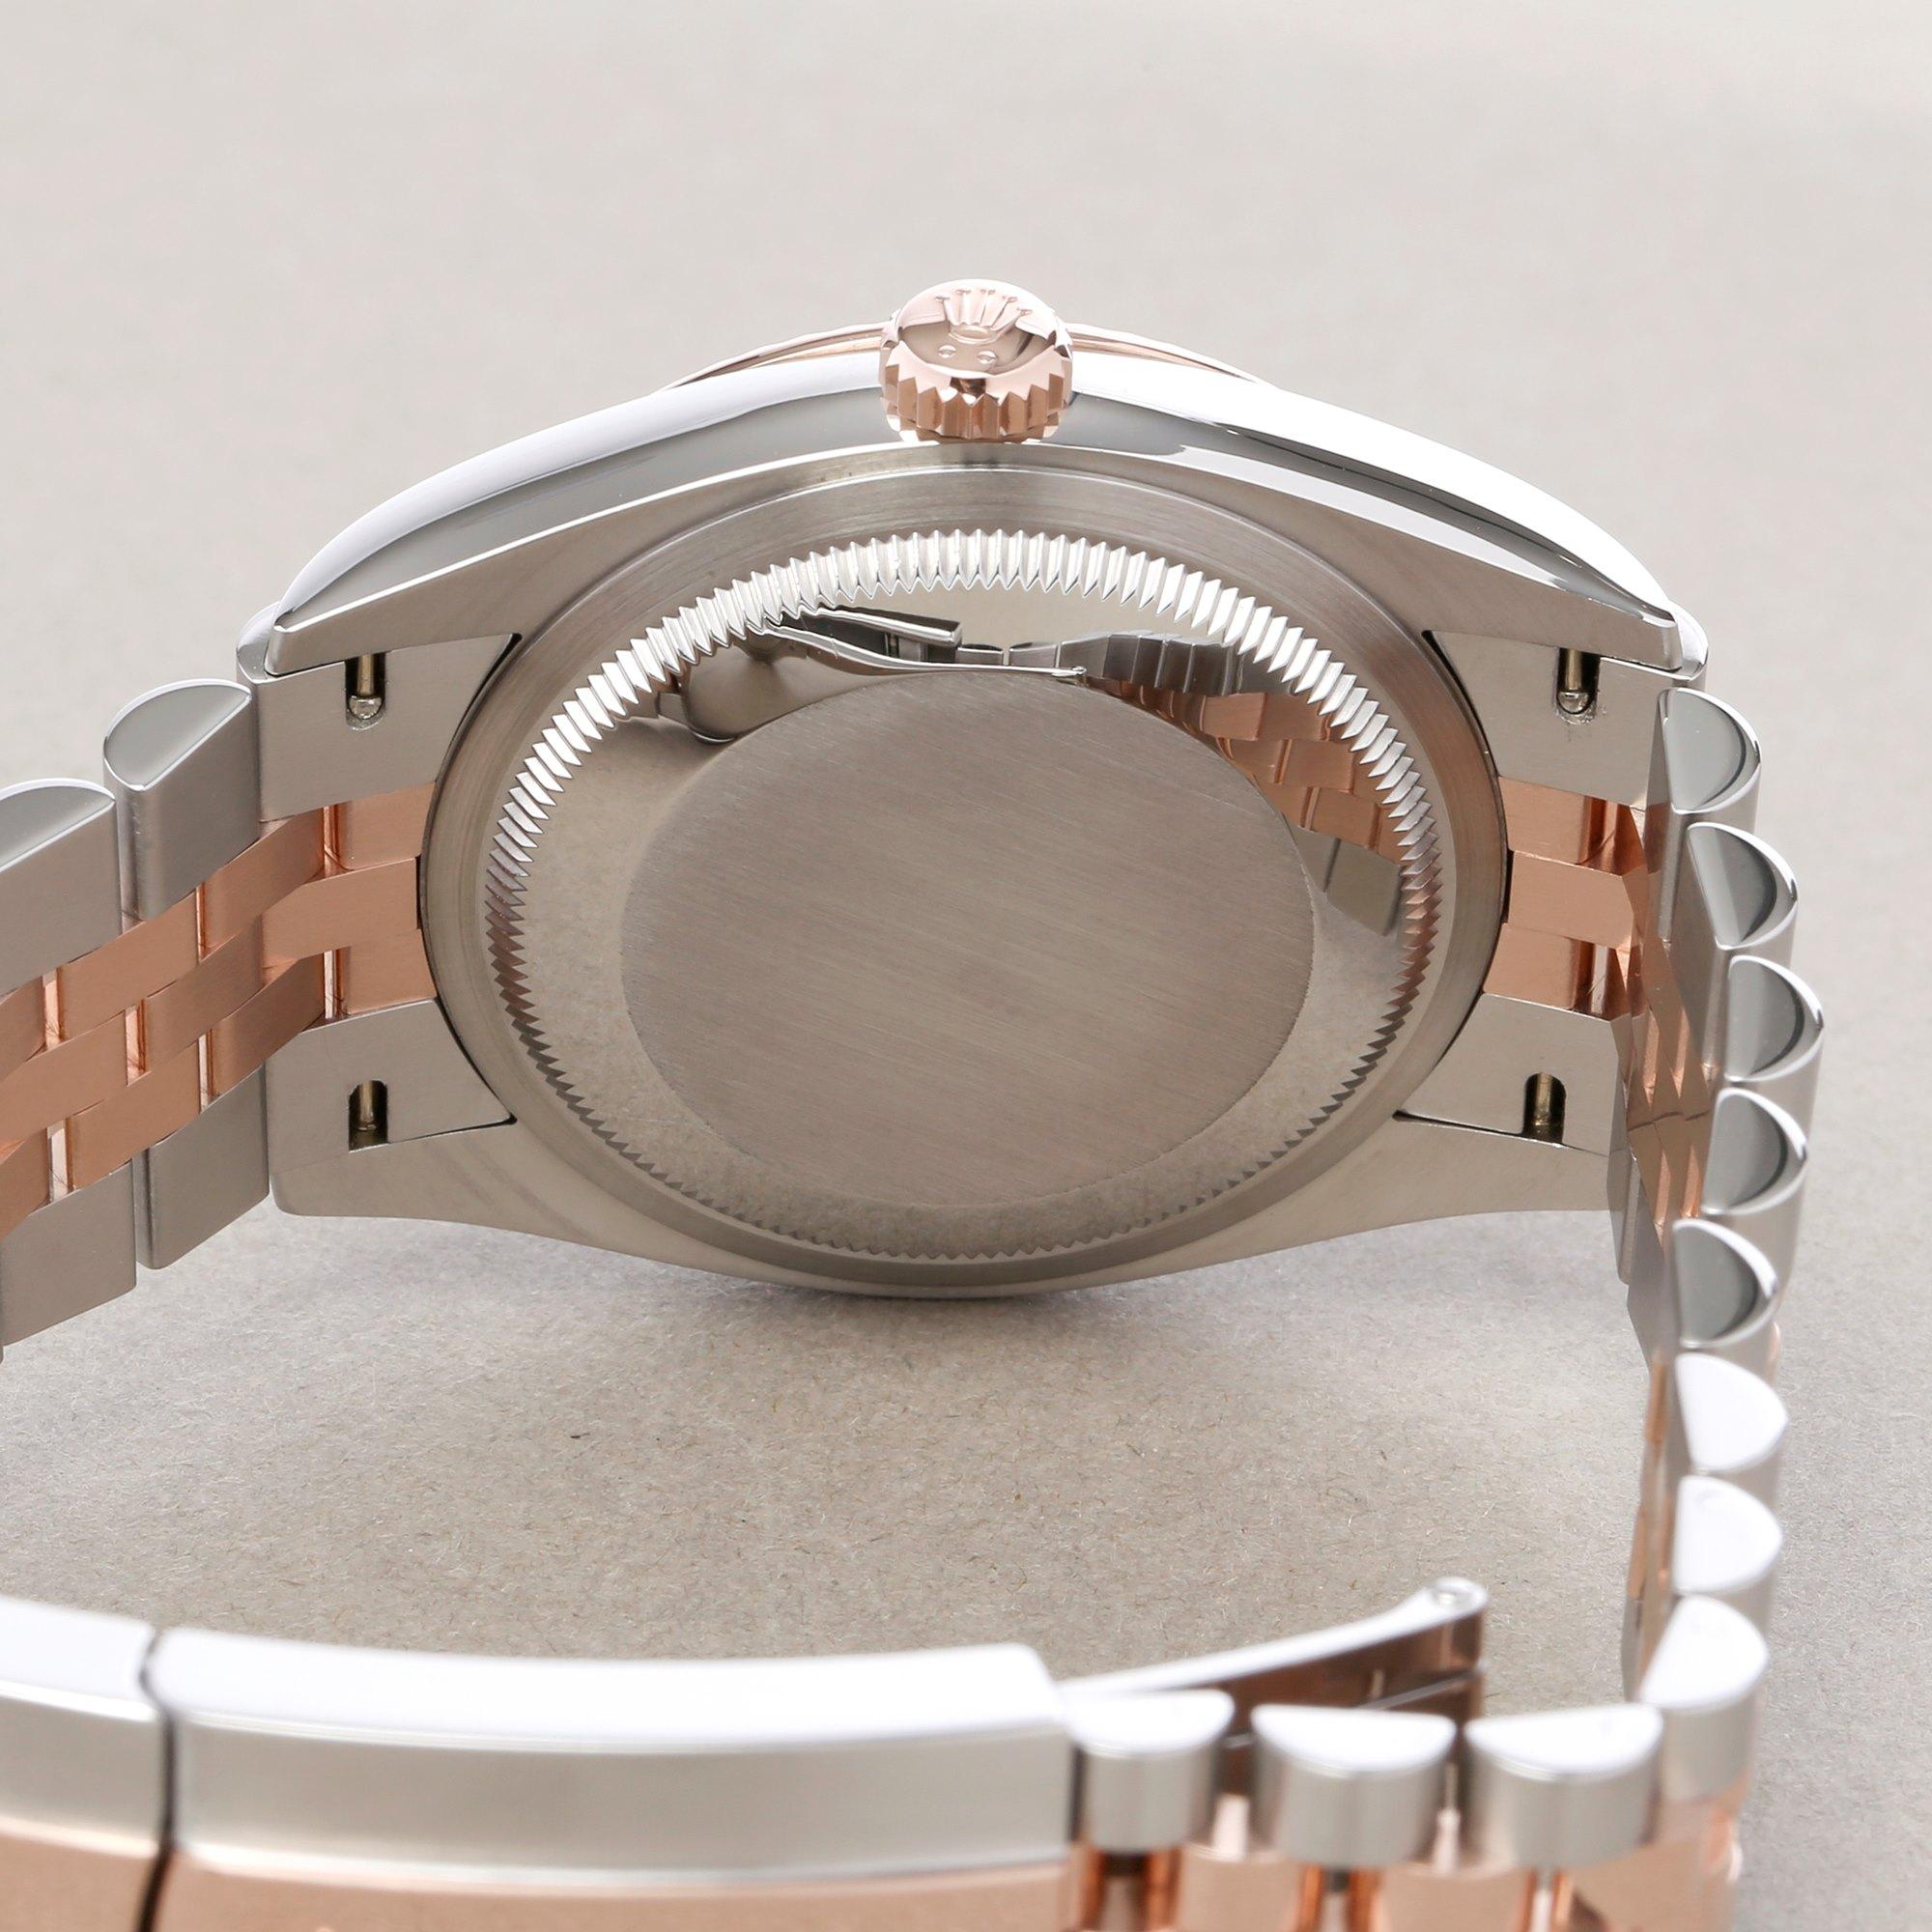 Rolex Datejust 36 126231 Unisex Rose Gold & Stainless Steel Watch 1